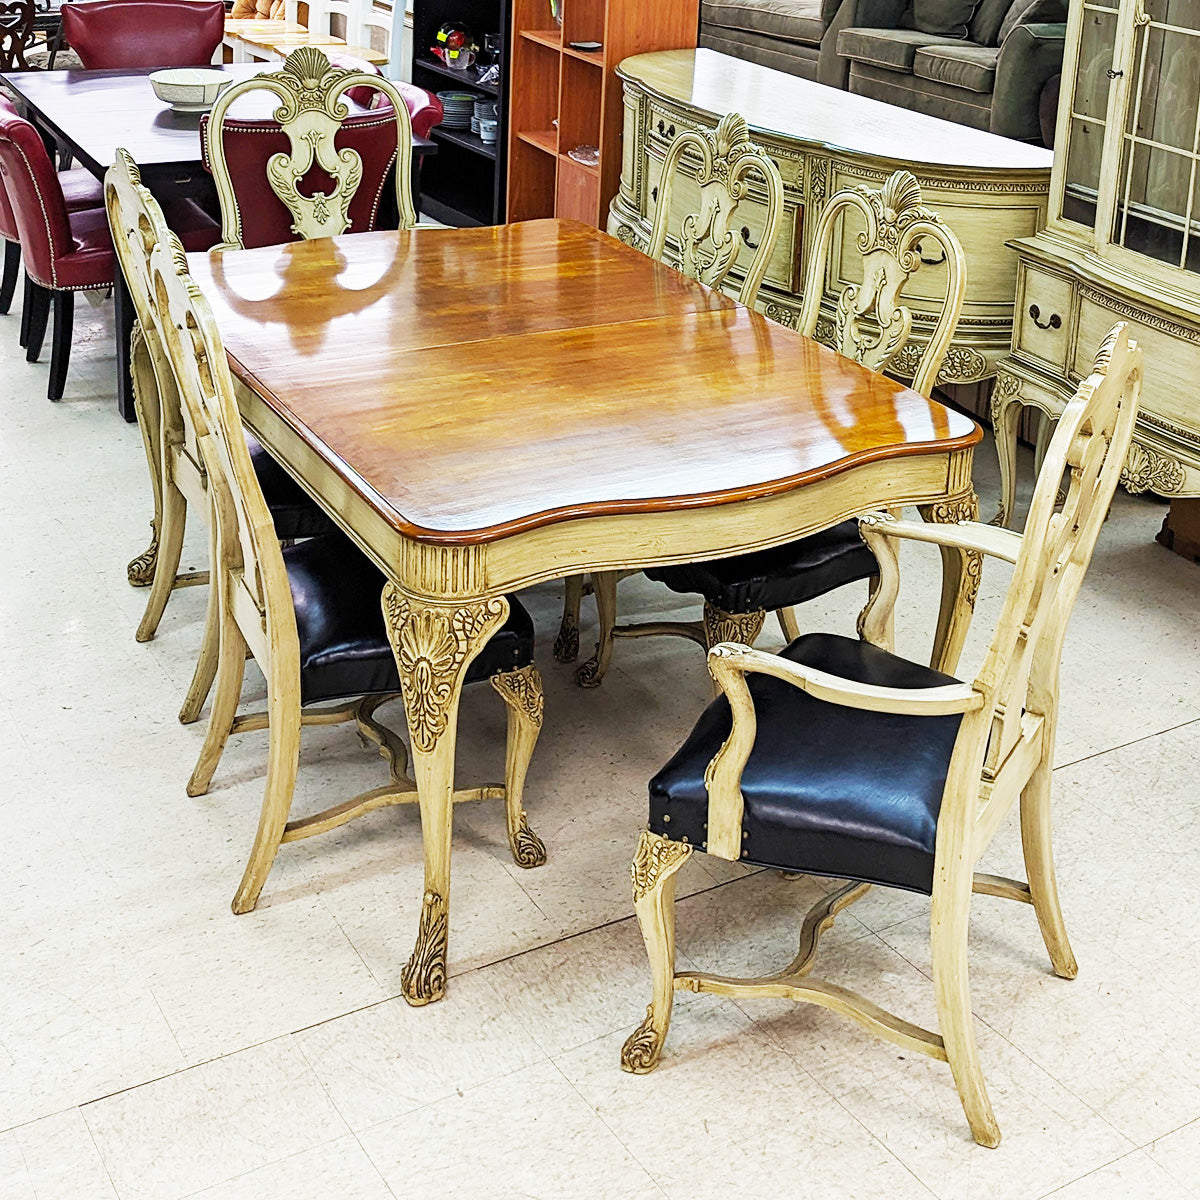 SET French Provincial Dining Room Furniture - Habroc - Online ReStore